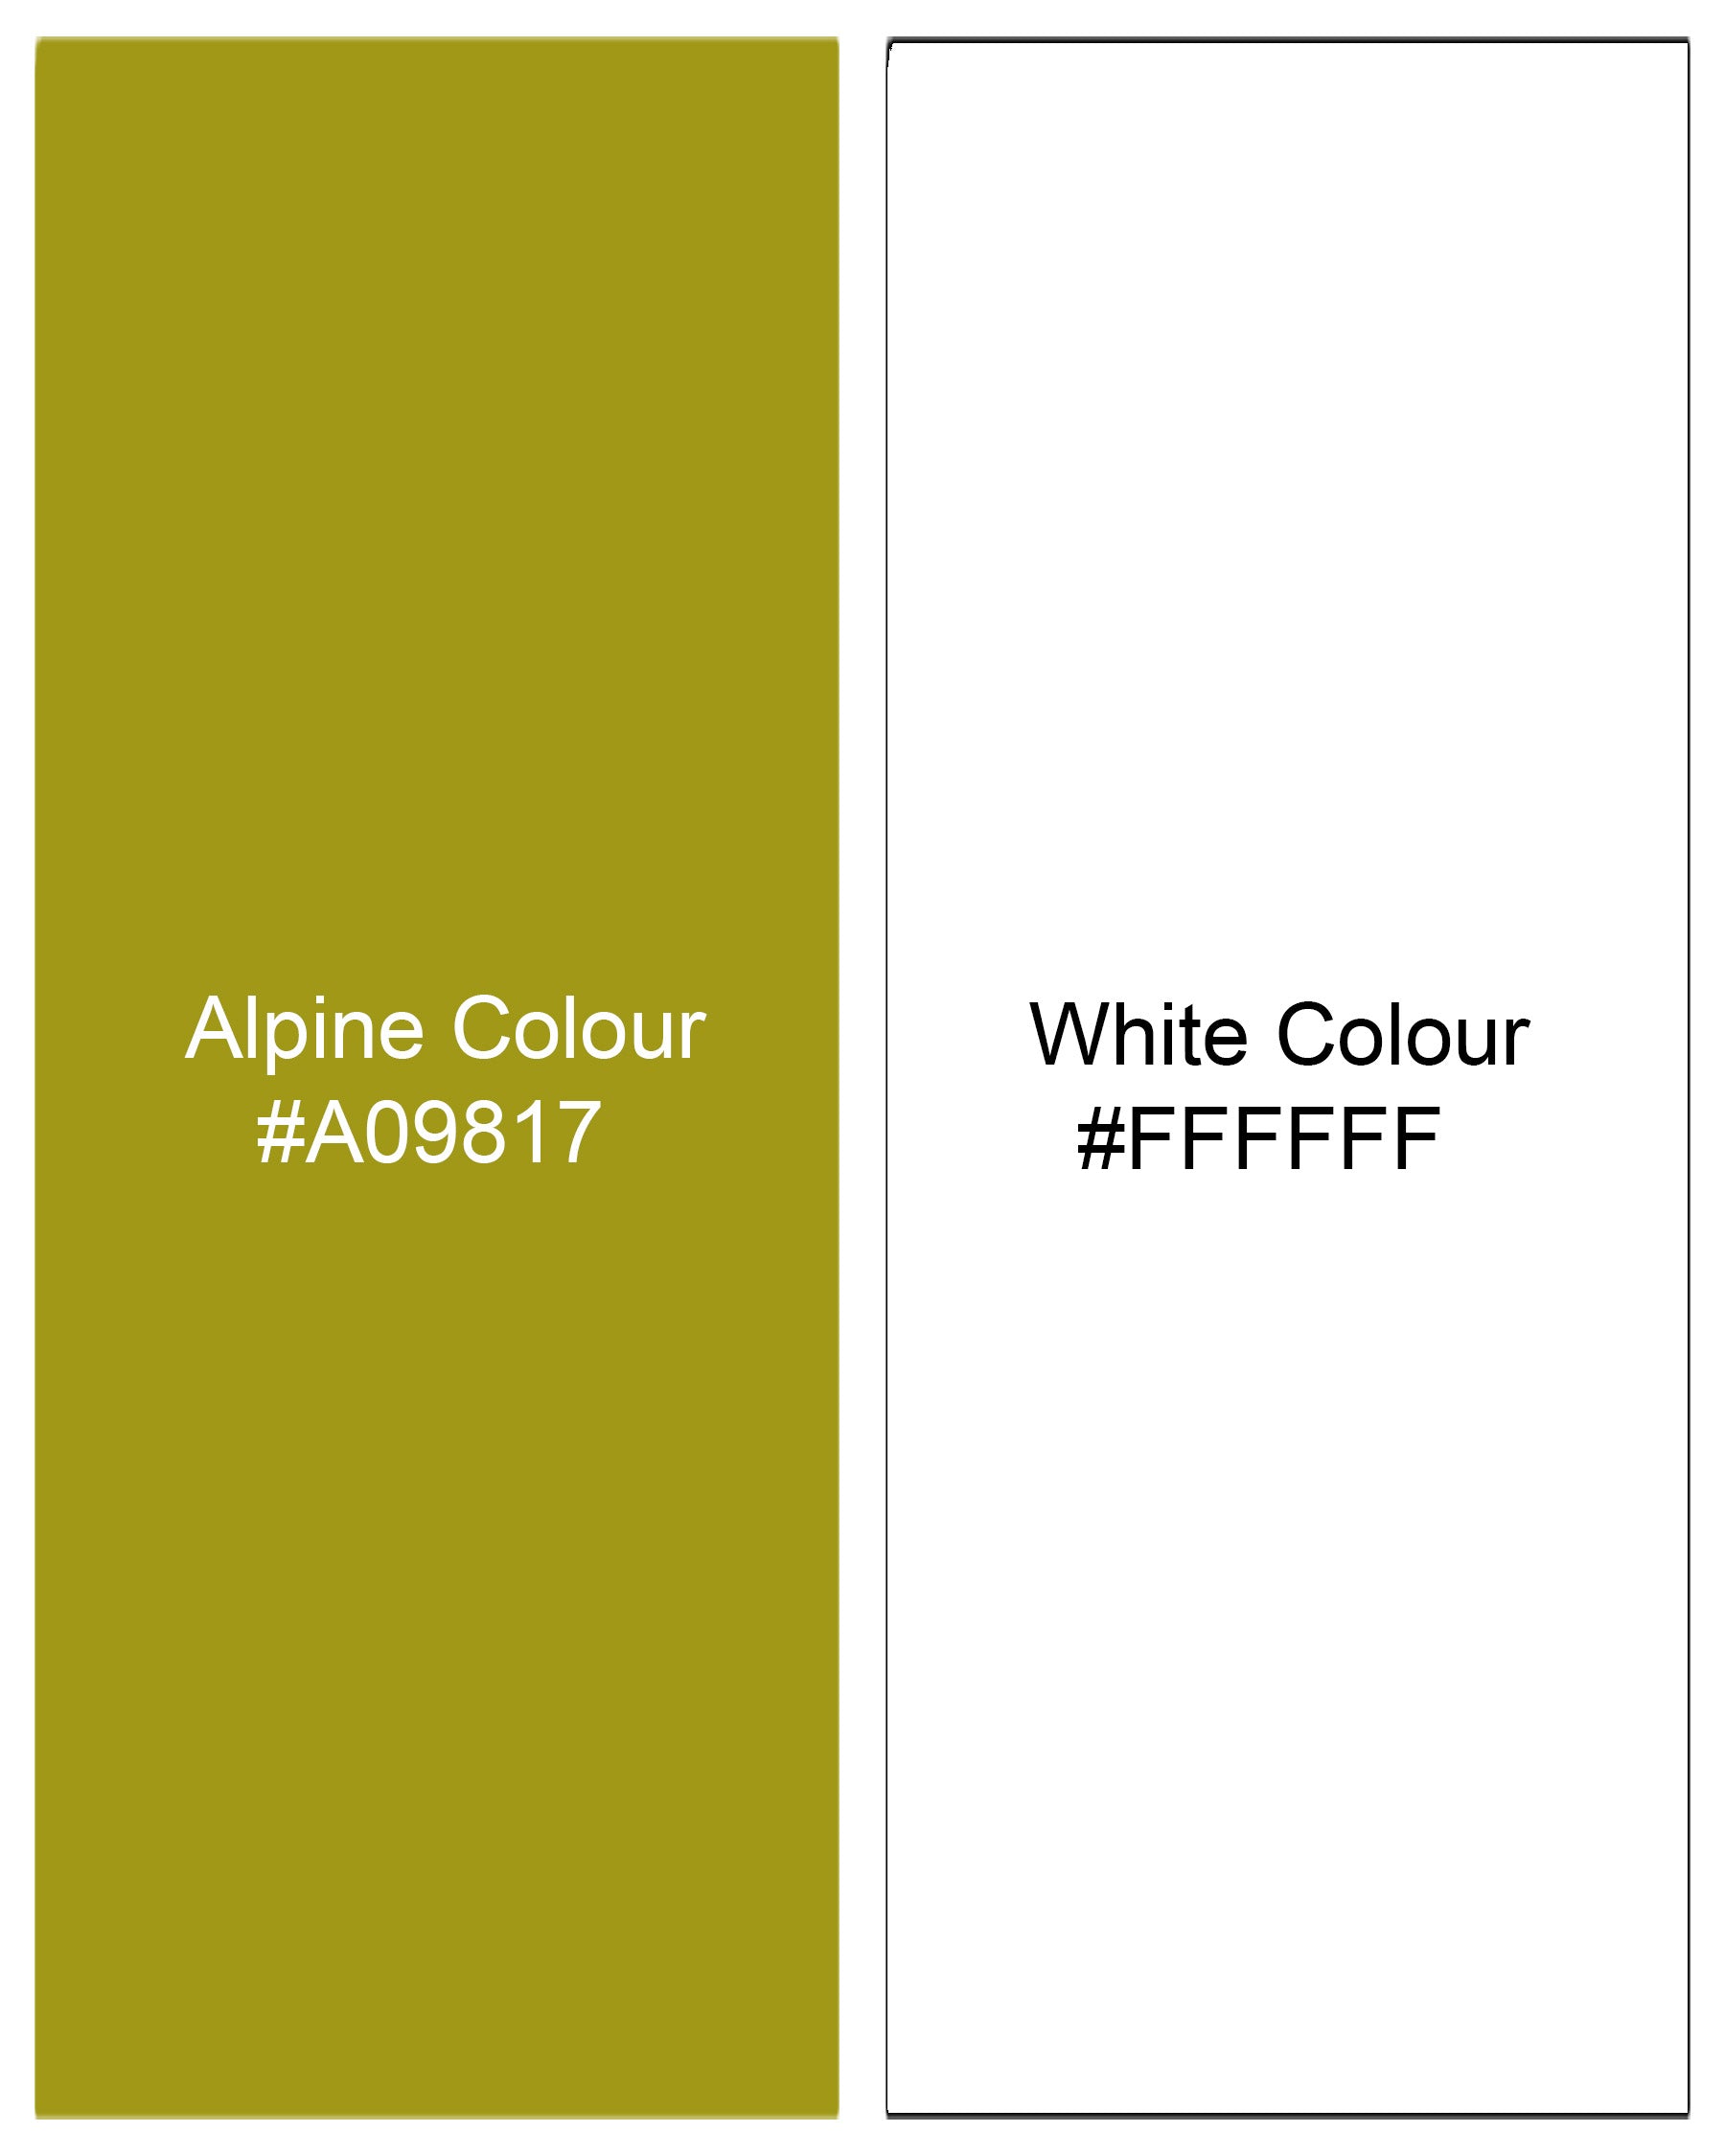 Alpine Olive Green and Bright White Checked Premium Cotton Designer Shirt 7702-P310-38, 7702-P310-39, 7702-P310-40, 7702-P310-42, 7702-P310-44, 7702-P310-46, 7702-P310-48, 7702-P310-50, 7702-P310-52